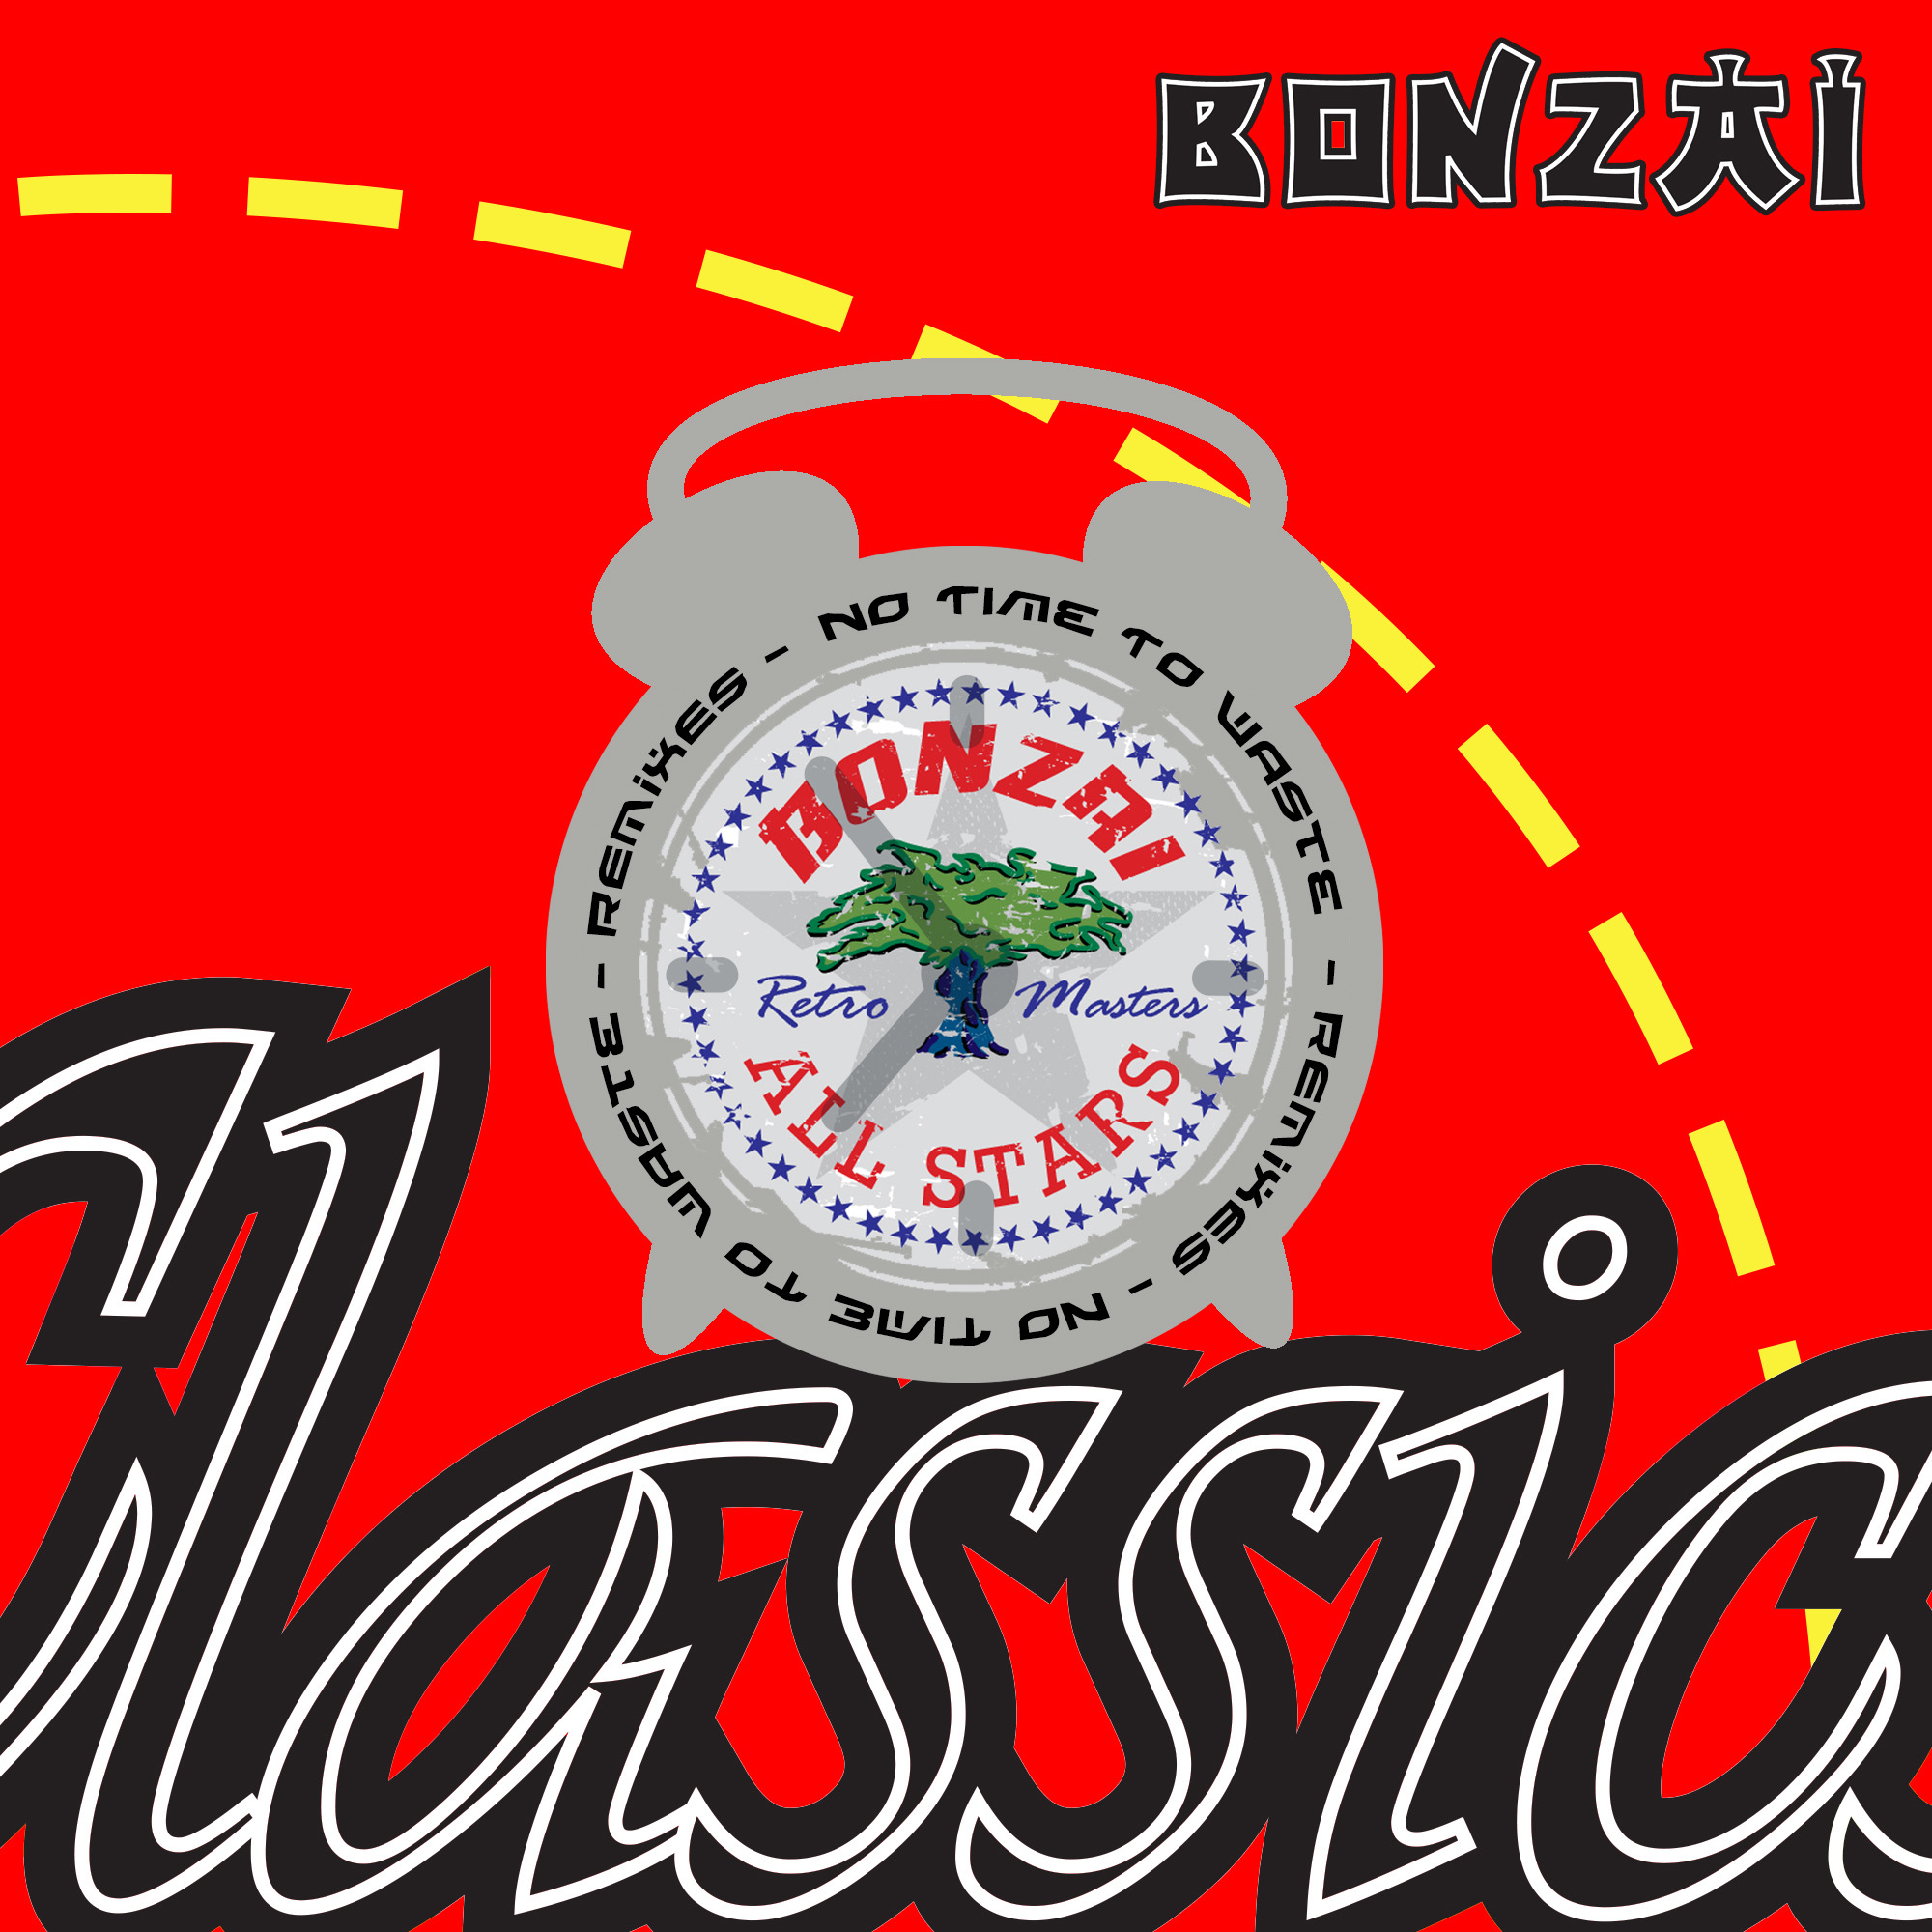 Various Artists presents Bonzai All Stars - No Time To Waste - Remixes on Bonzai Classics